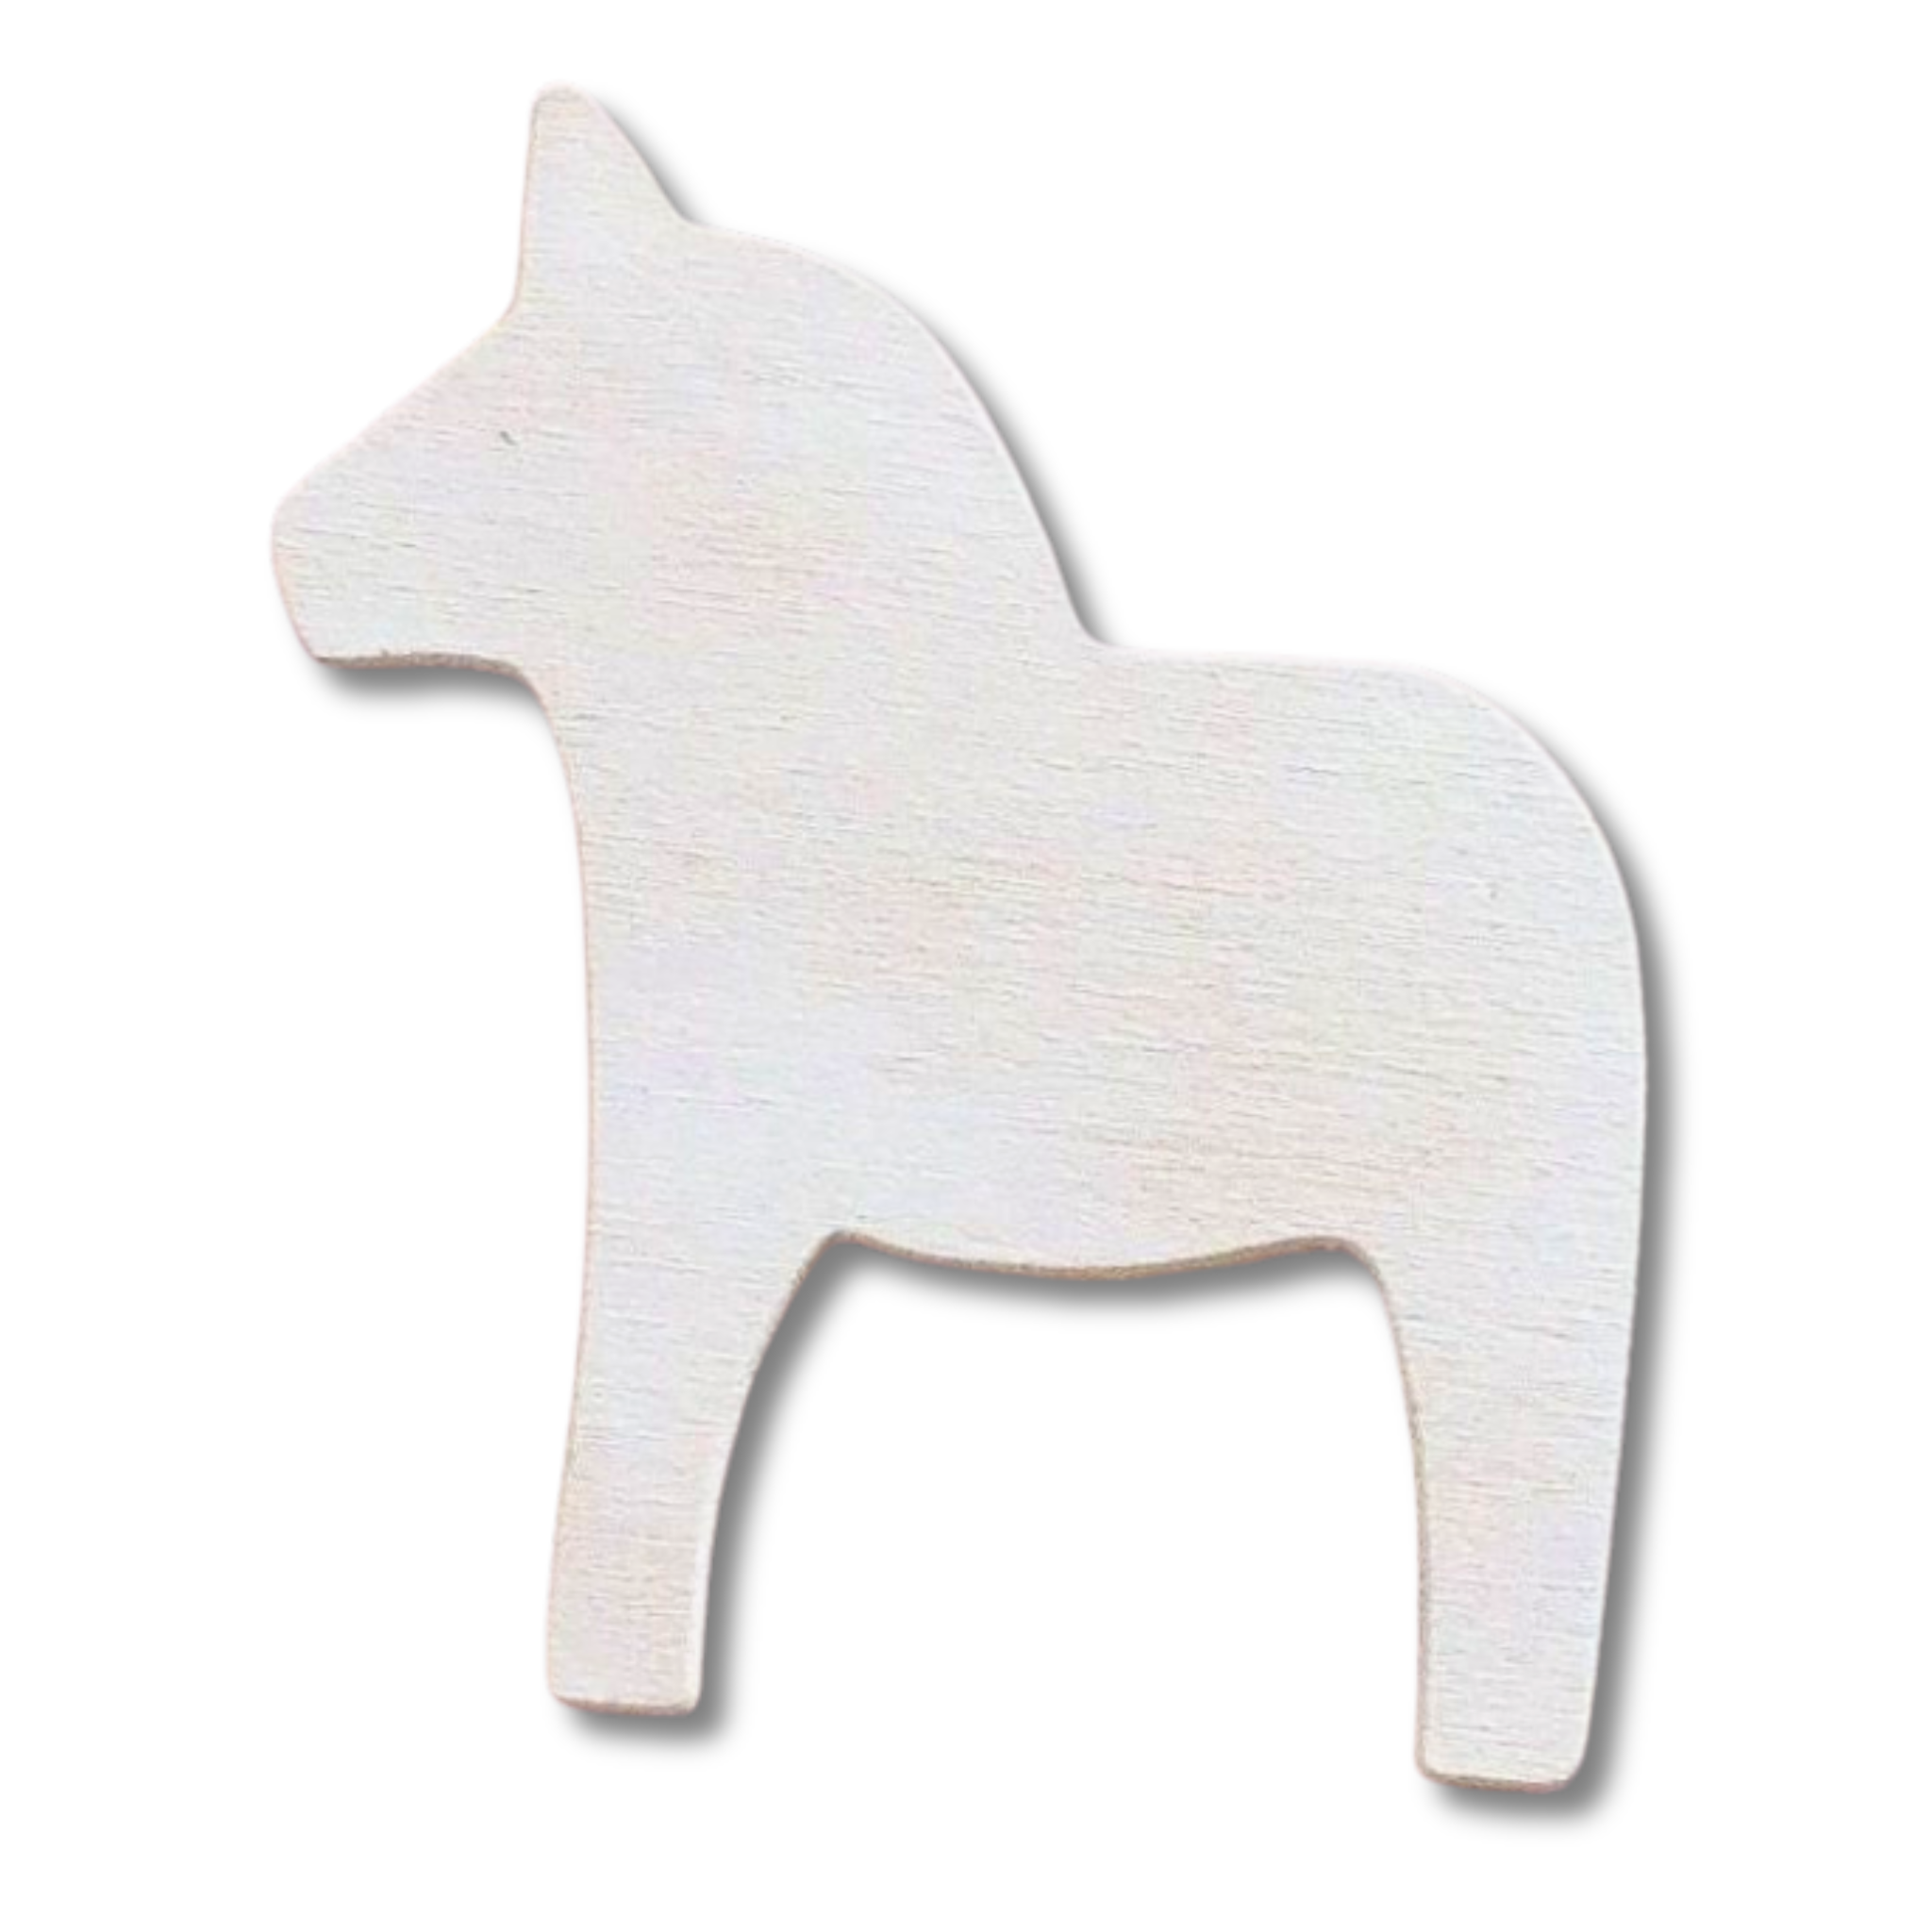 wooden dala horse magnet white made in sweden